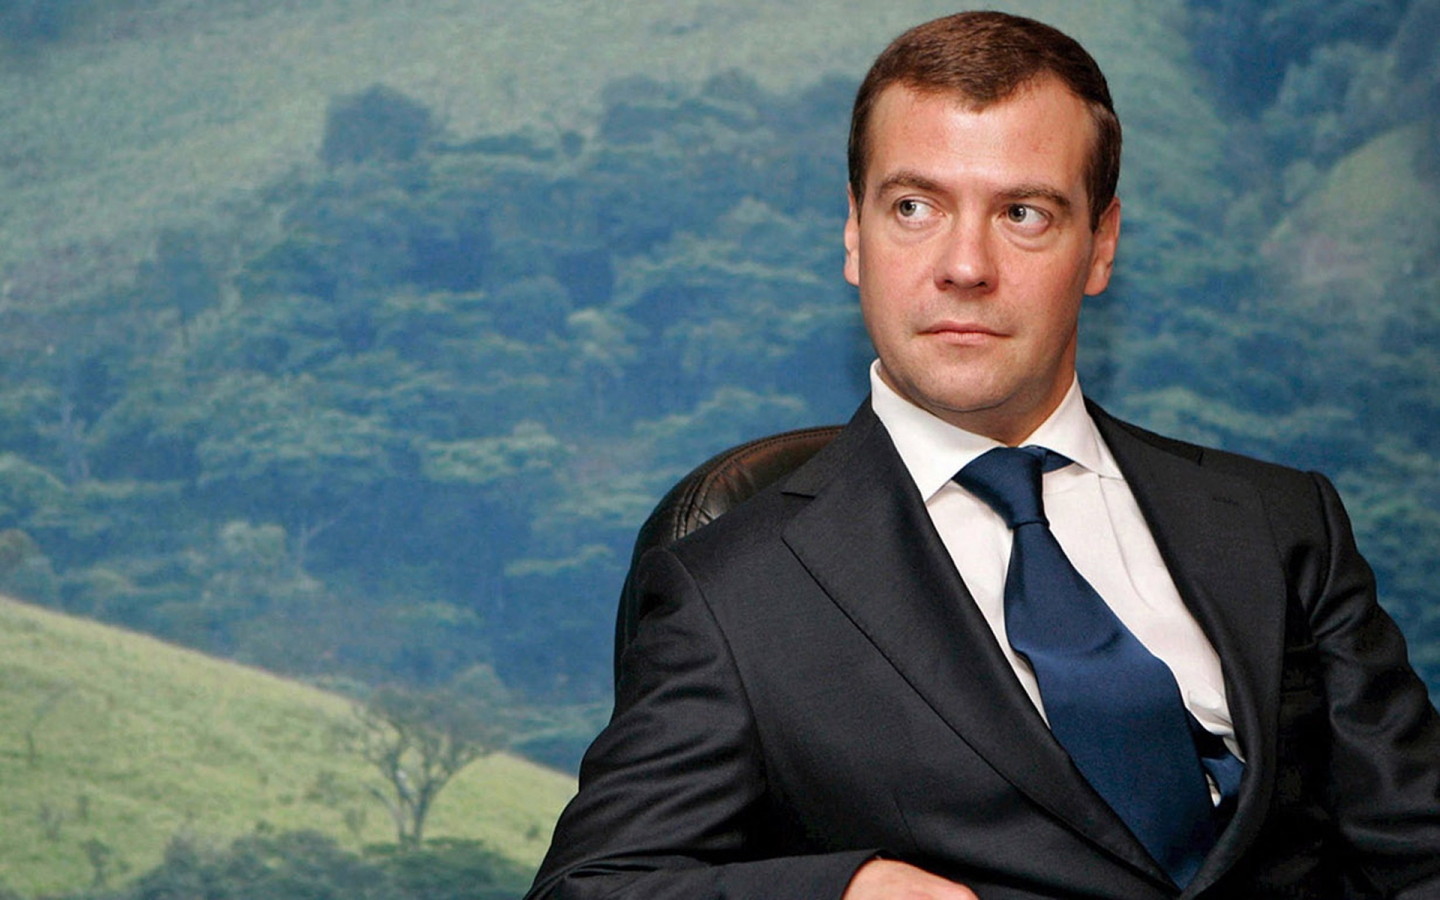 Dmitry Medvedev for 1440 x 900 widescreen resolution